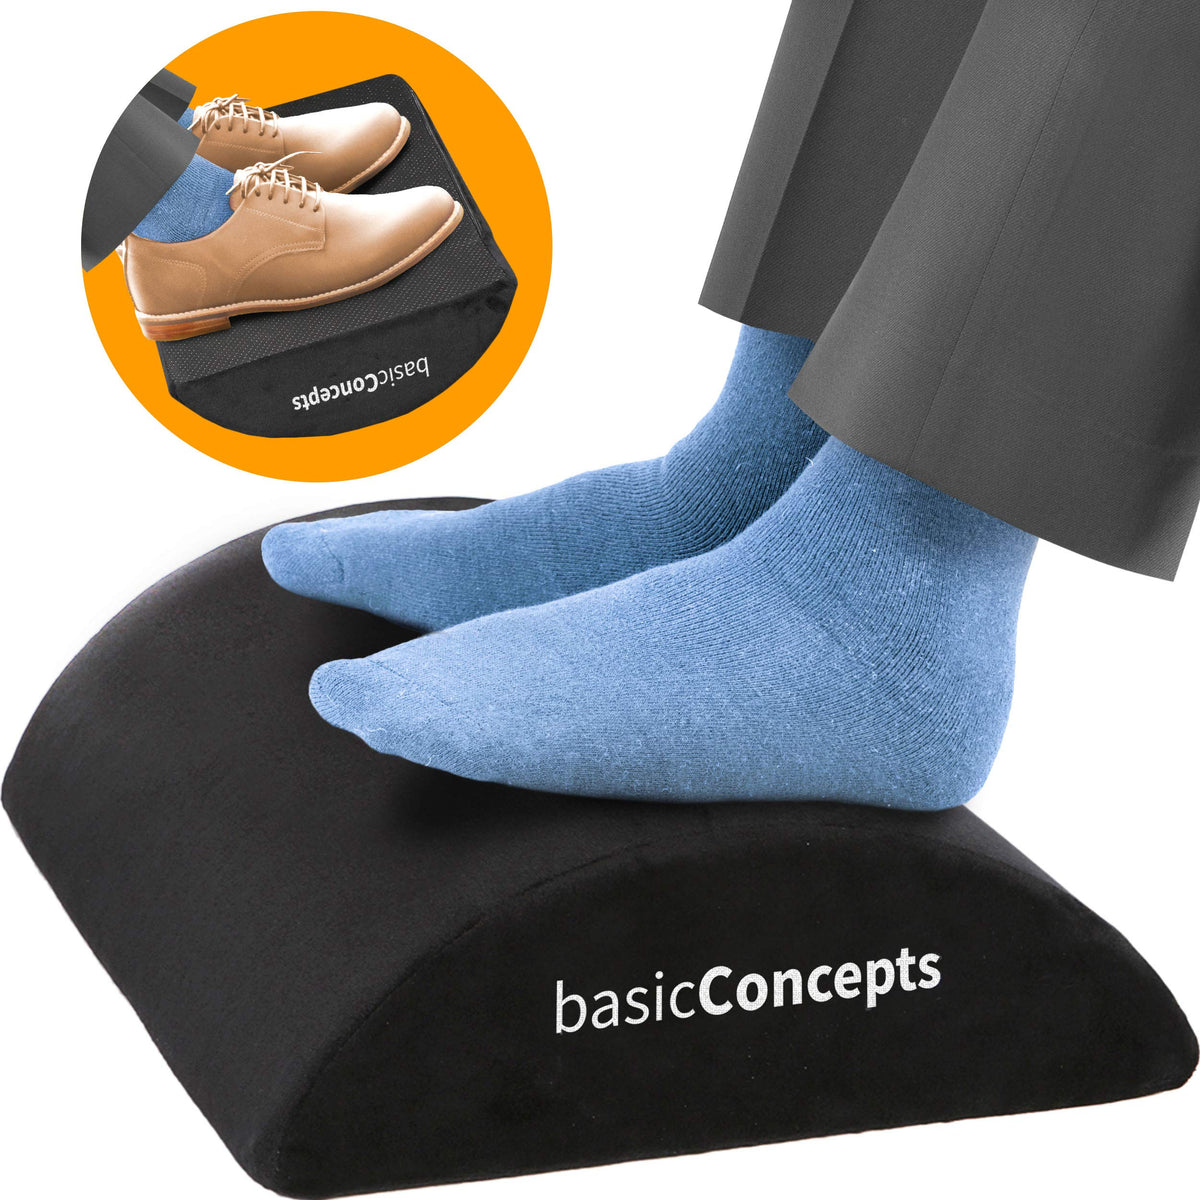   Basics Under Desk Foot Rest - Black : Office